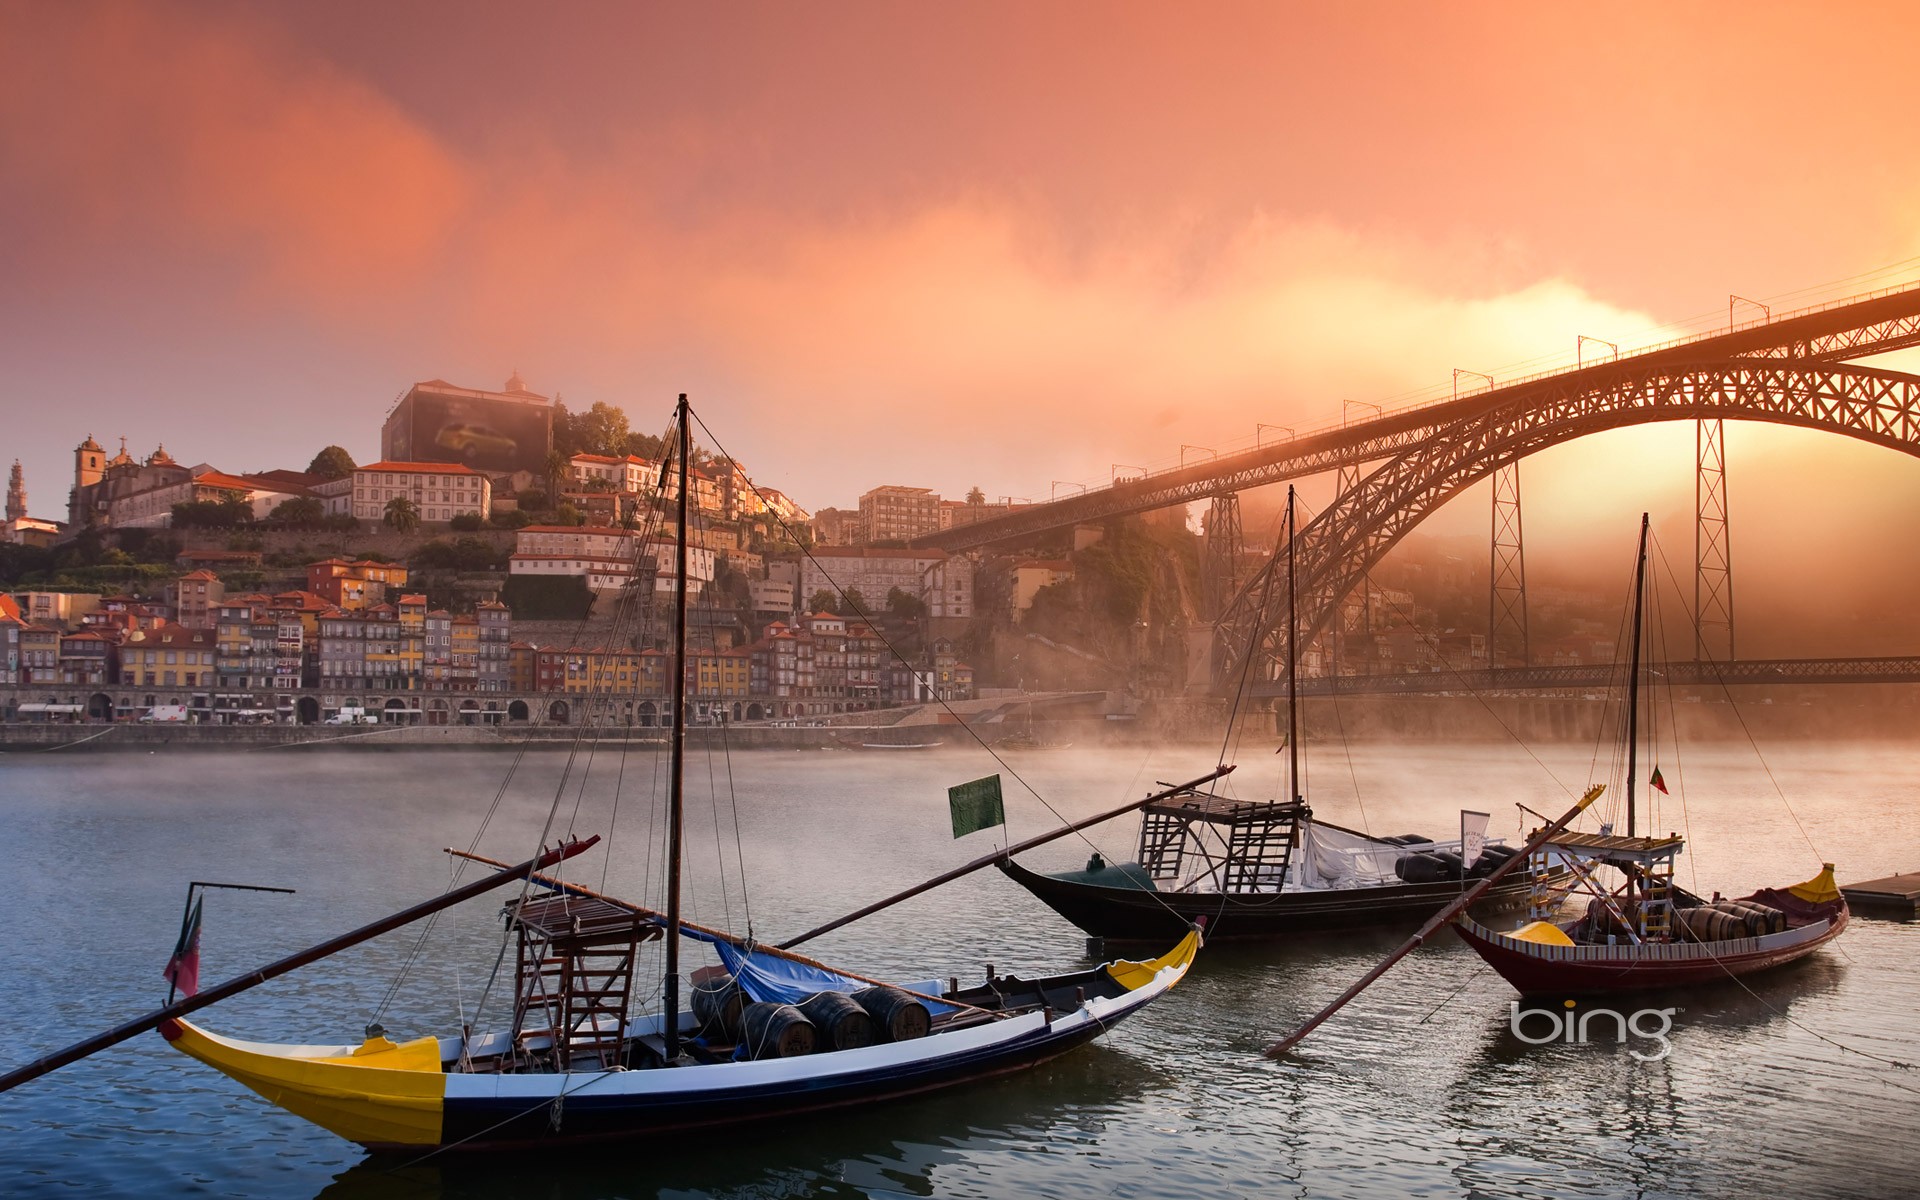 cityscapes, mist, bridges, Portugal, rivers, Bing, Oporto, The Douro, beaches - desktop wallpaper